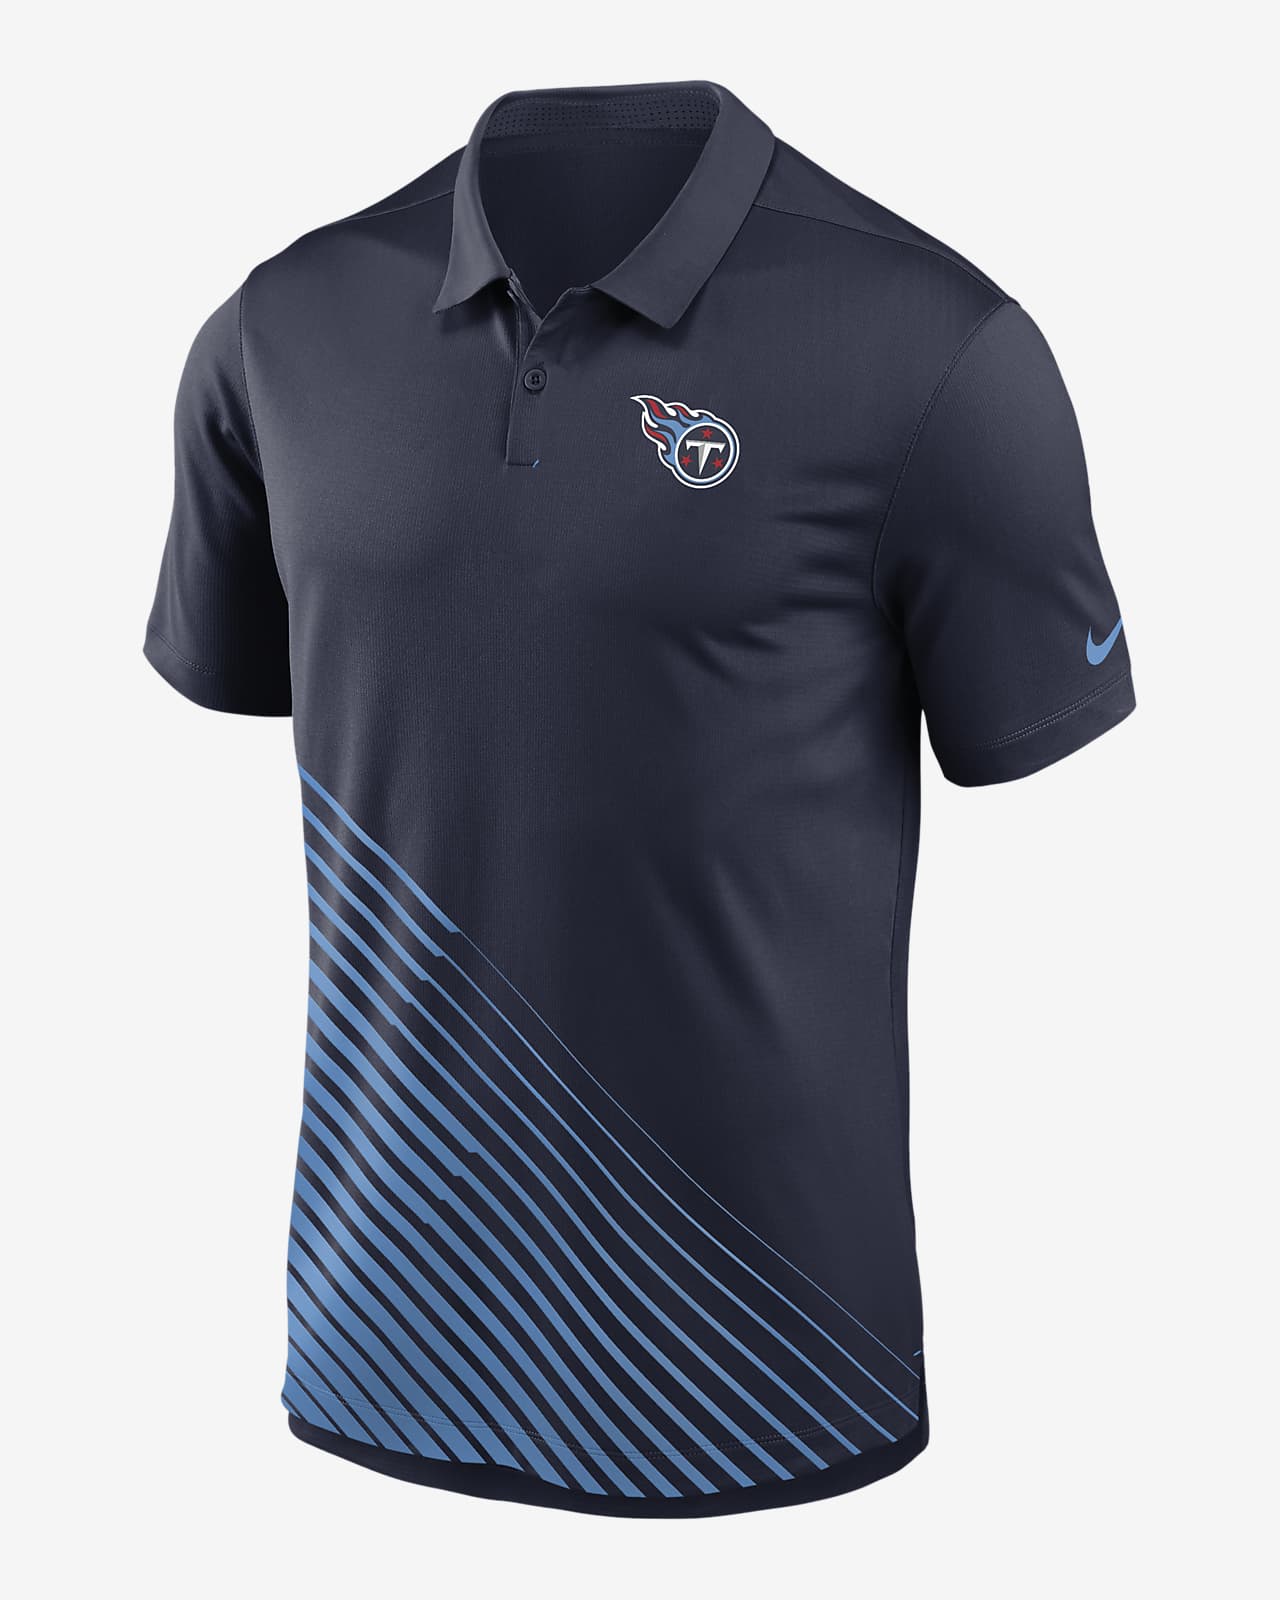 Nike Dri-FIT Yard Line (NFL Tennessee Titans) Men's Polo